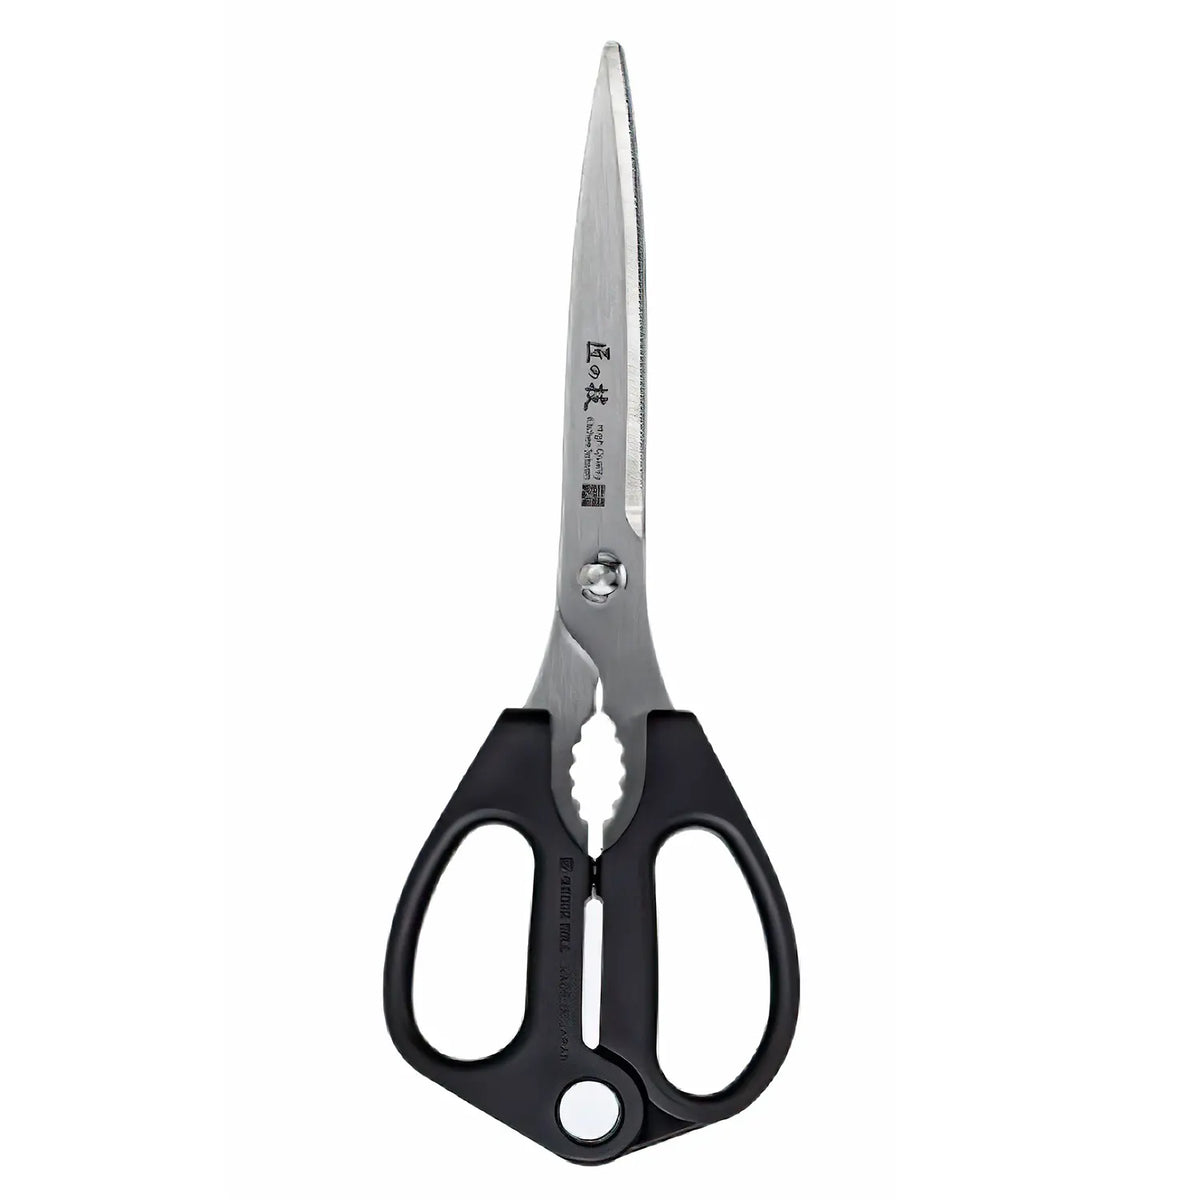 Stainless Steel Kitchen Scissors Heavy Duty Shear - Brilliant Promos - Be  Brilliant!